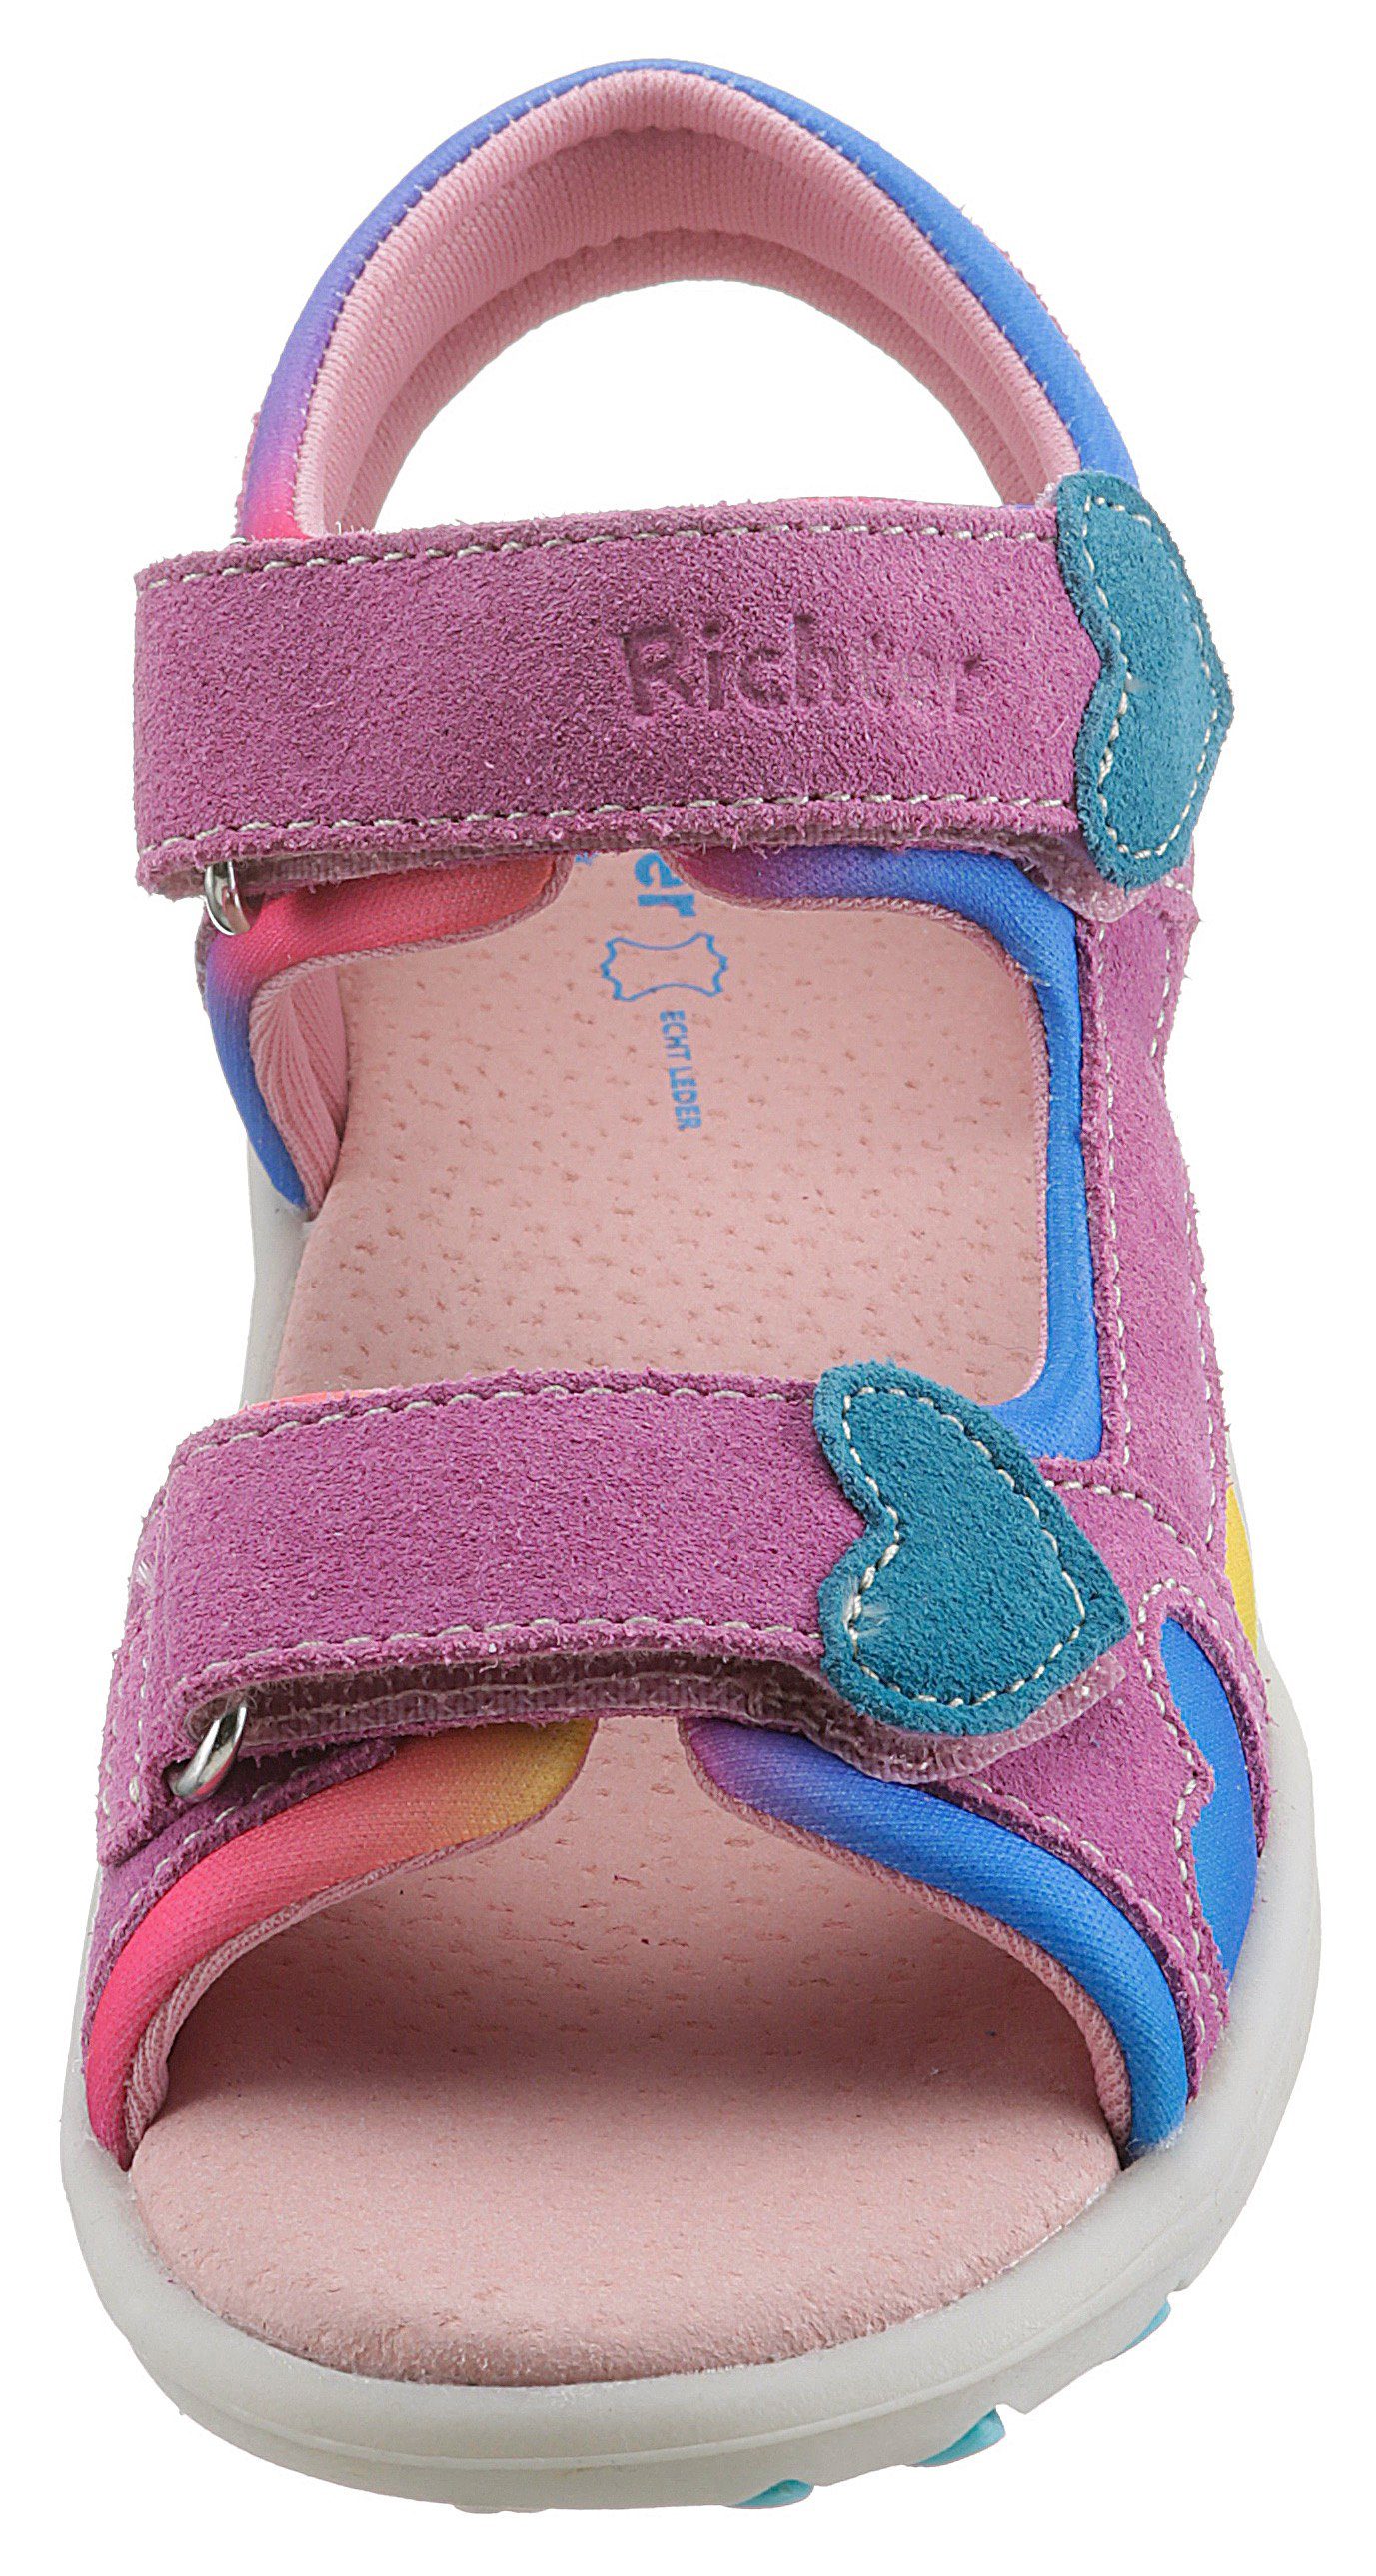 individuellem rosa-multi Dora Batik-Farbverlauf Richter Sandale mit